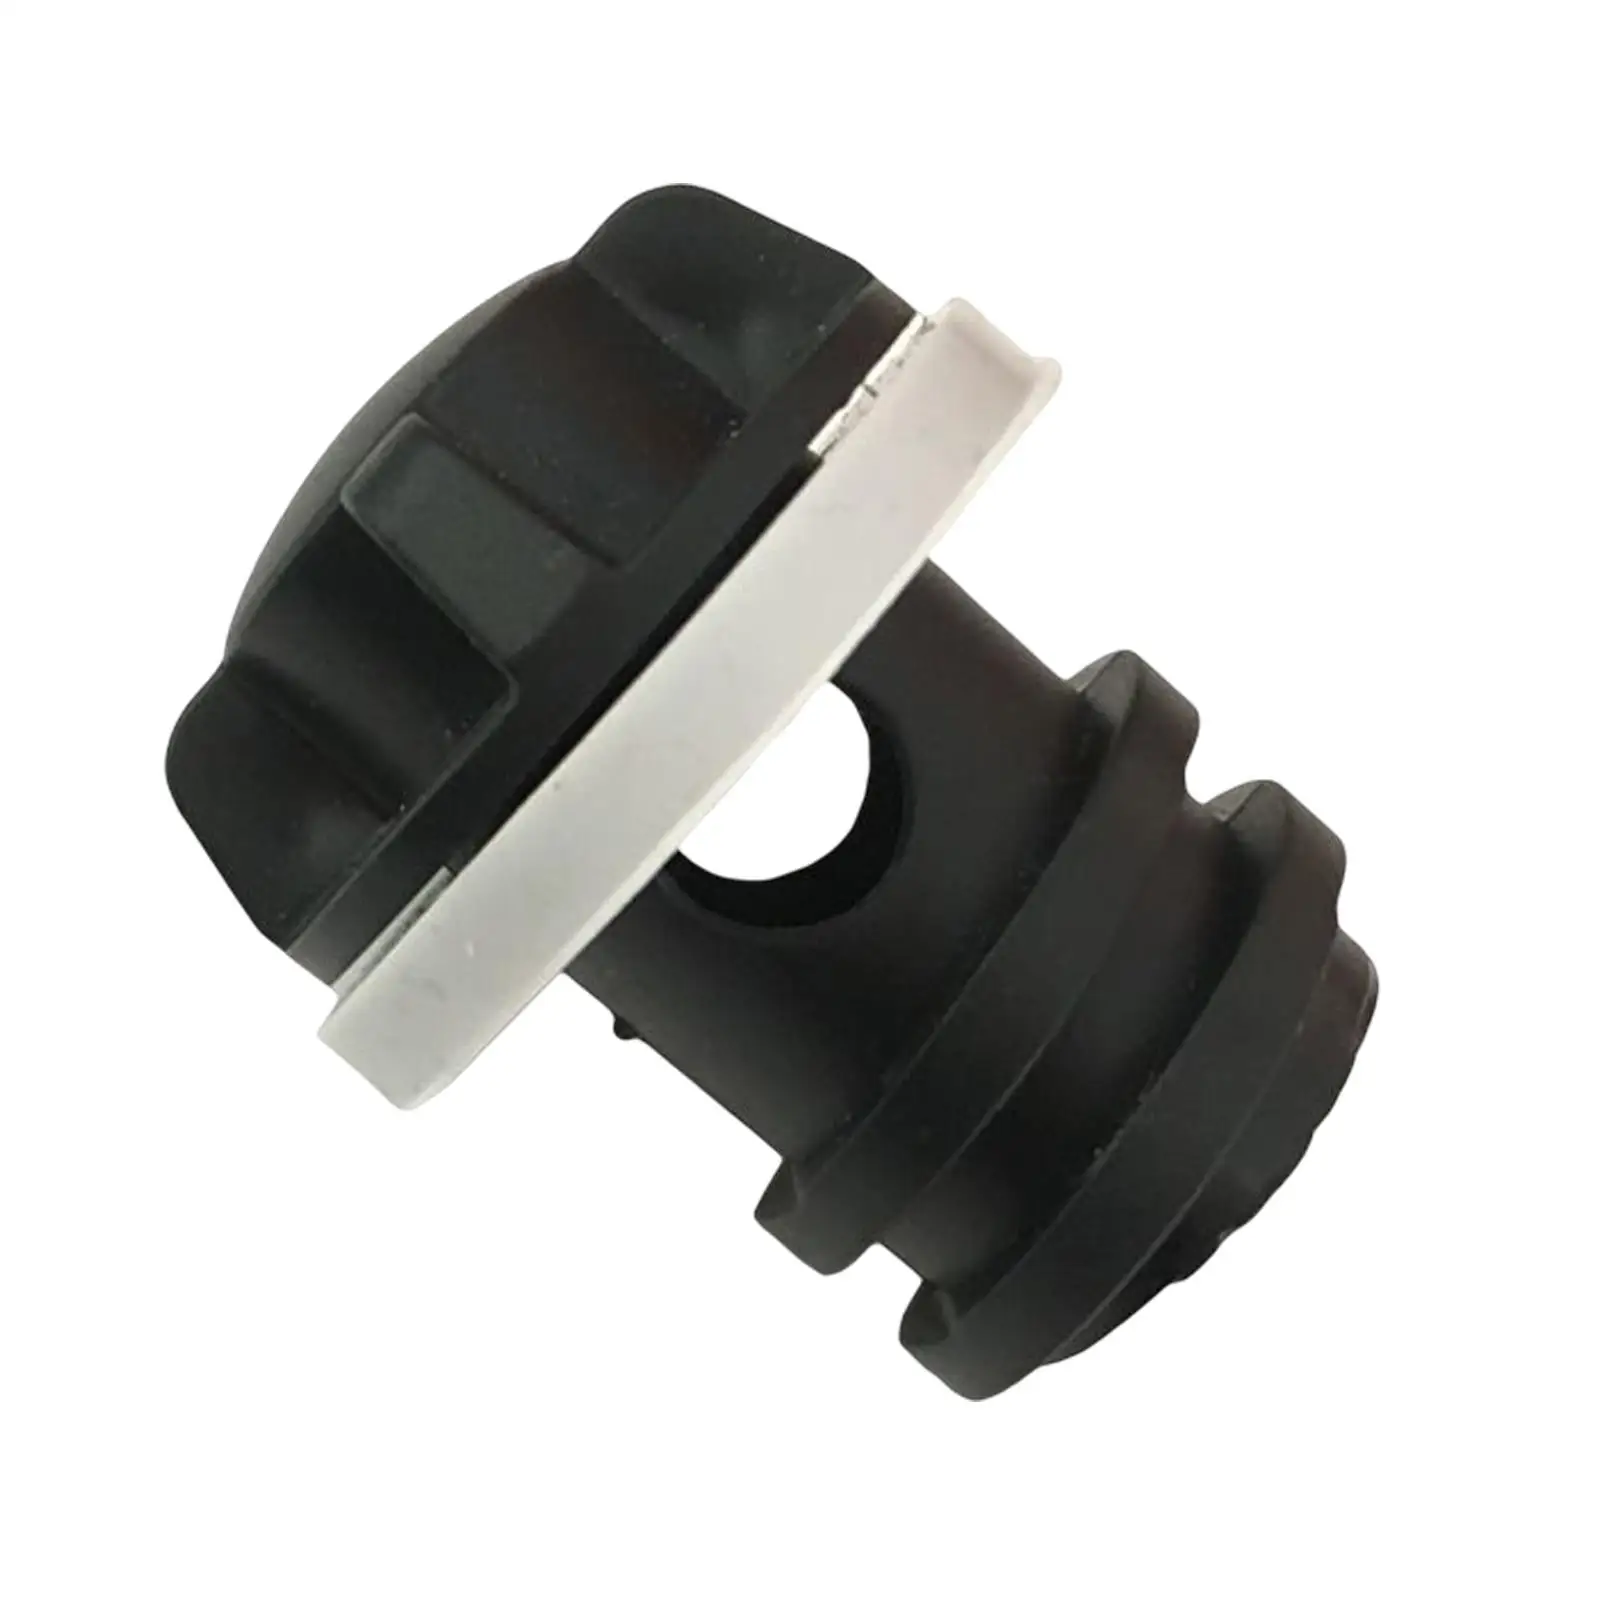 Drain Plug Finger Knob Design Replacement Design for Coolers Accessories